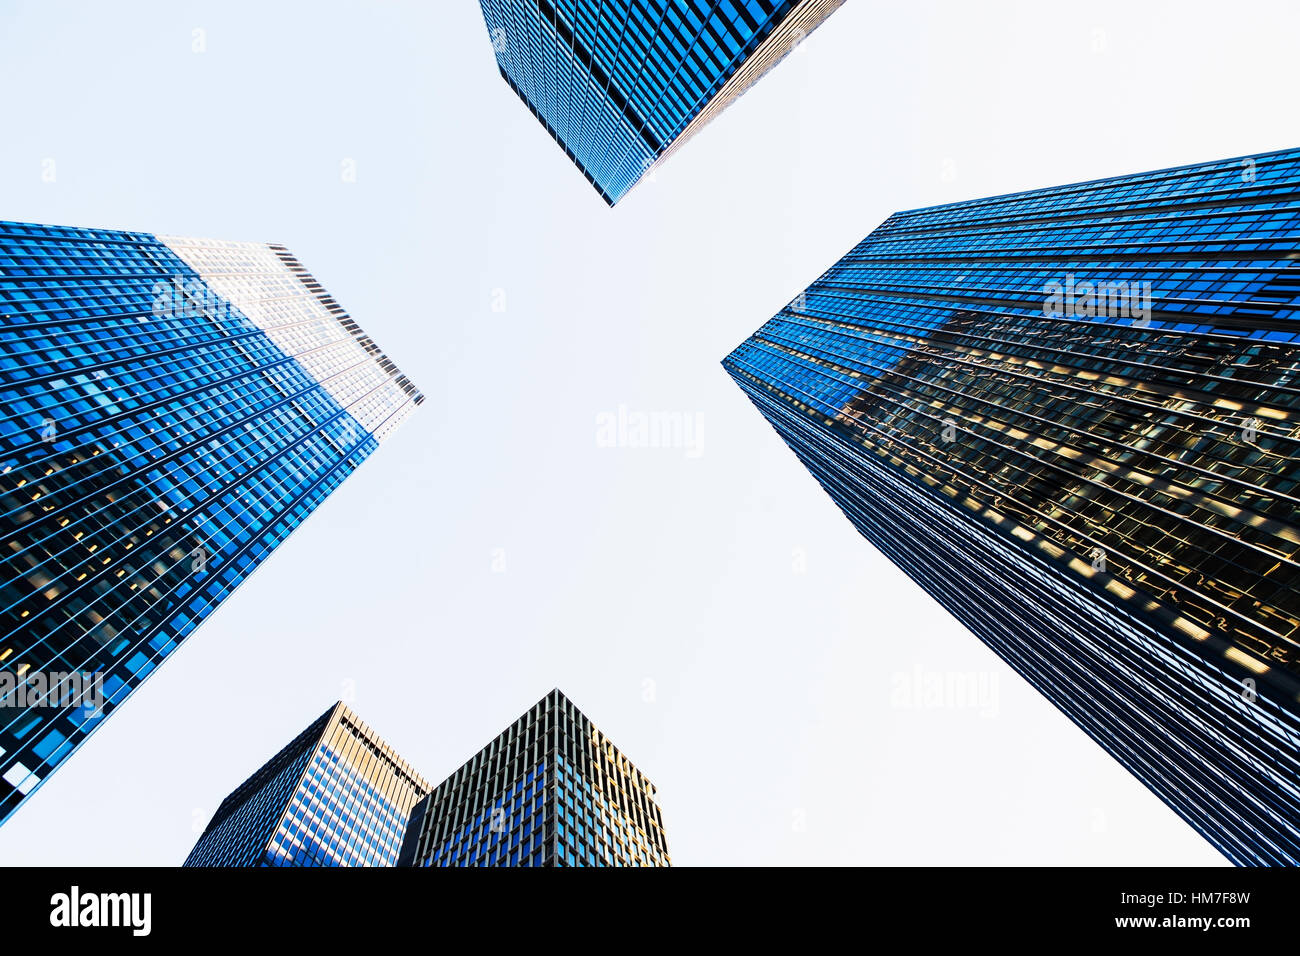 USA, New York, Office skyscrapers in sunlight Stock Photo